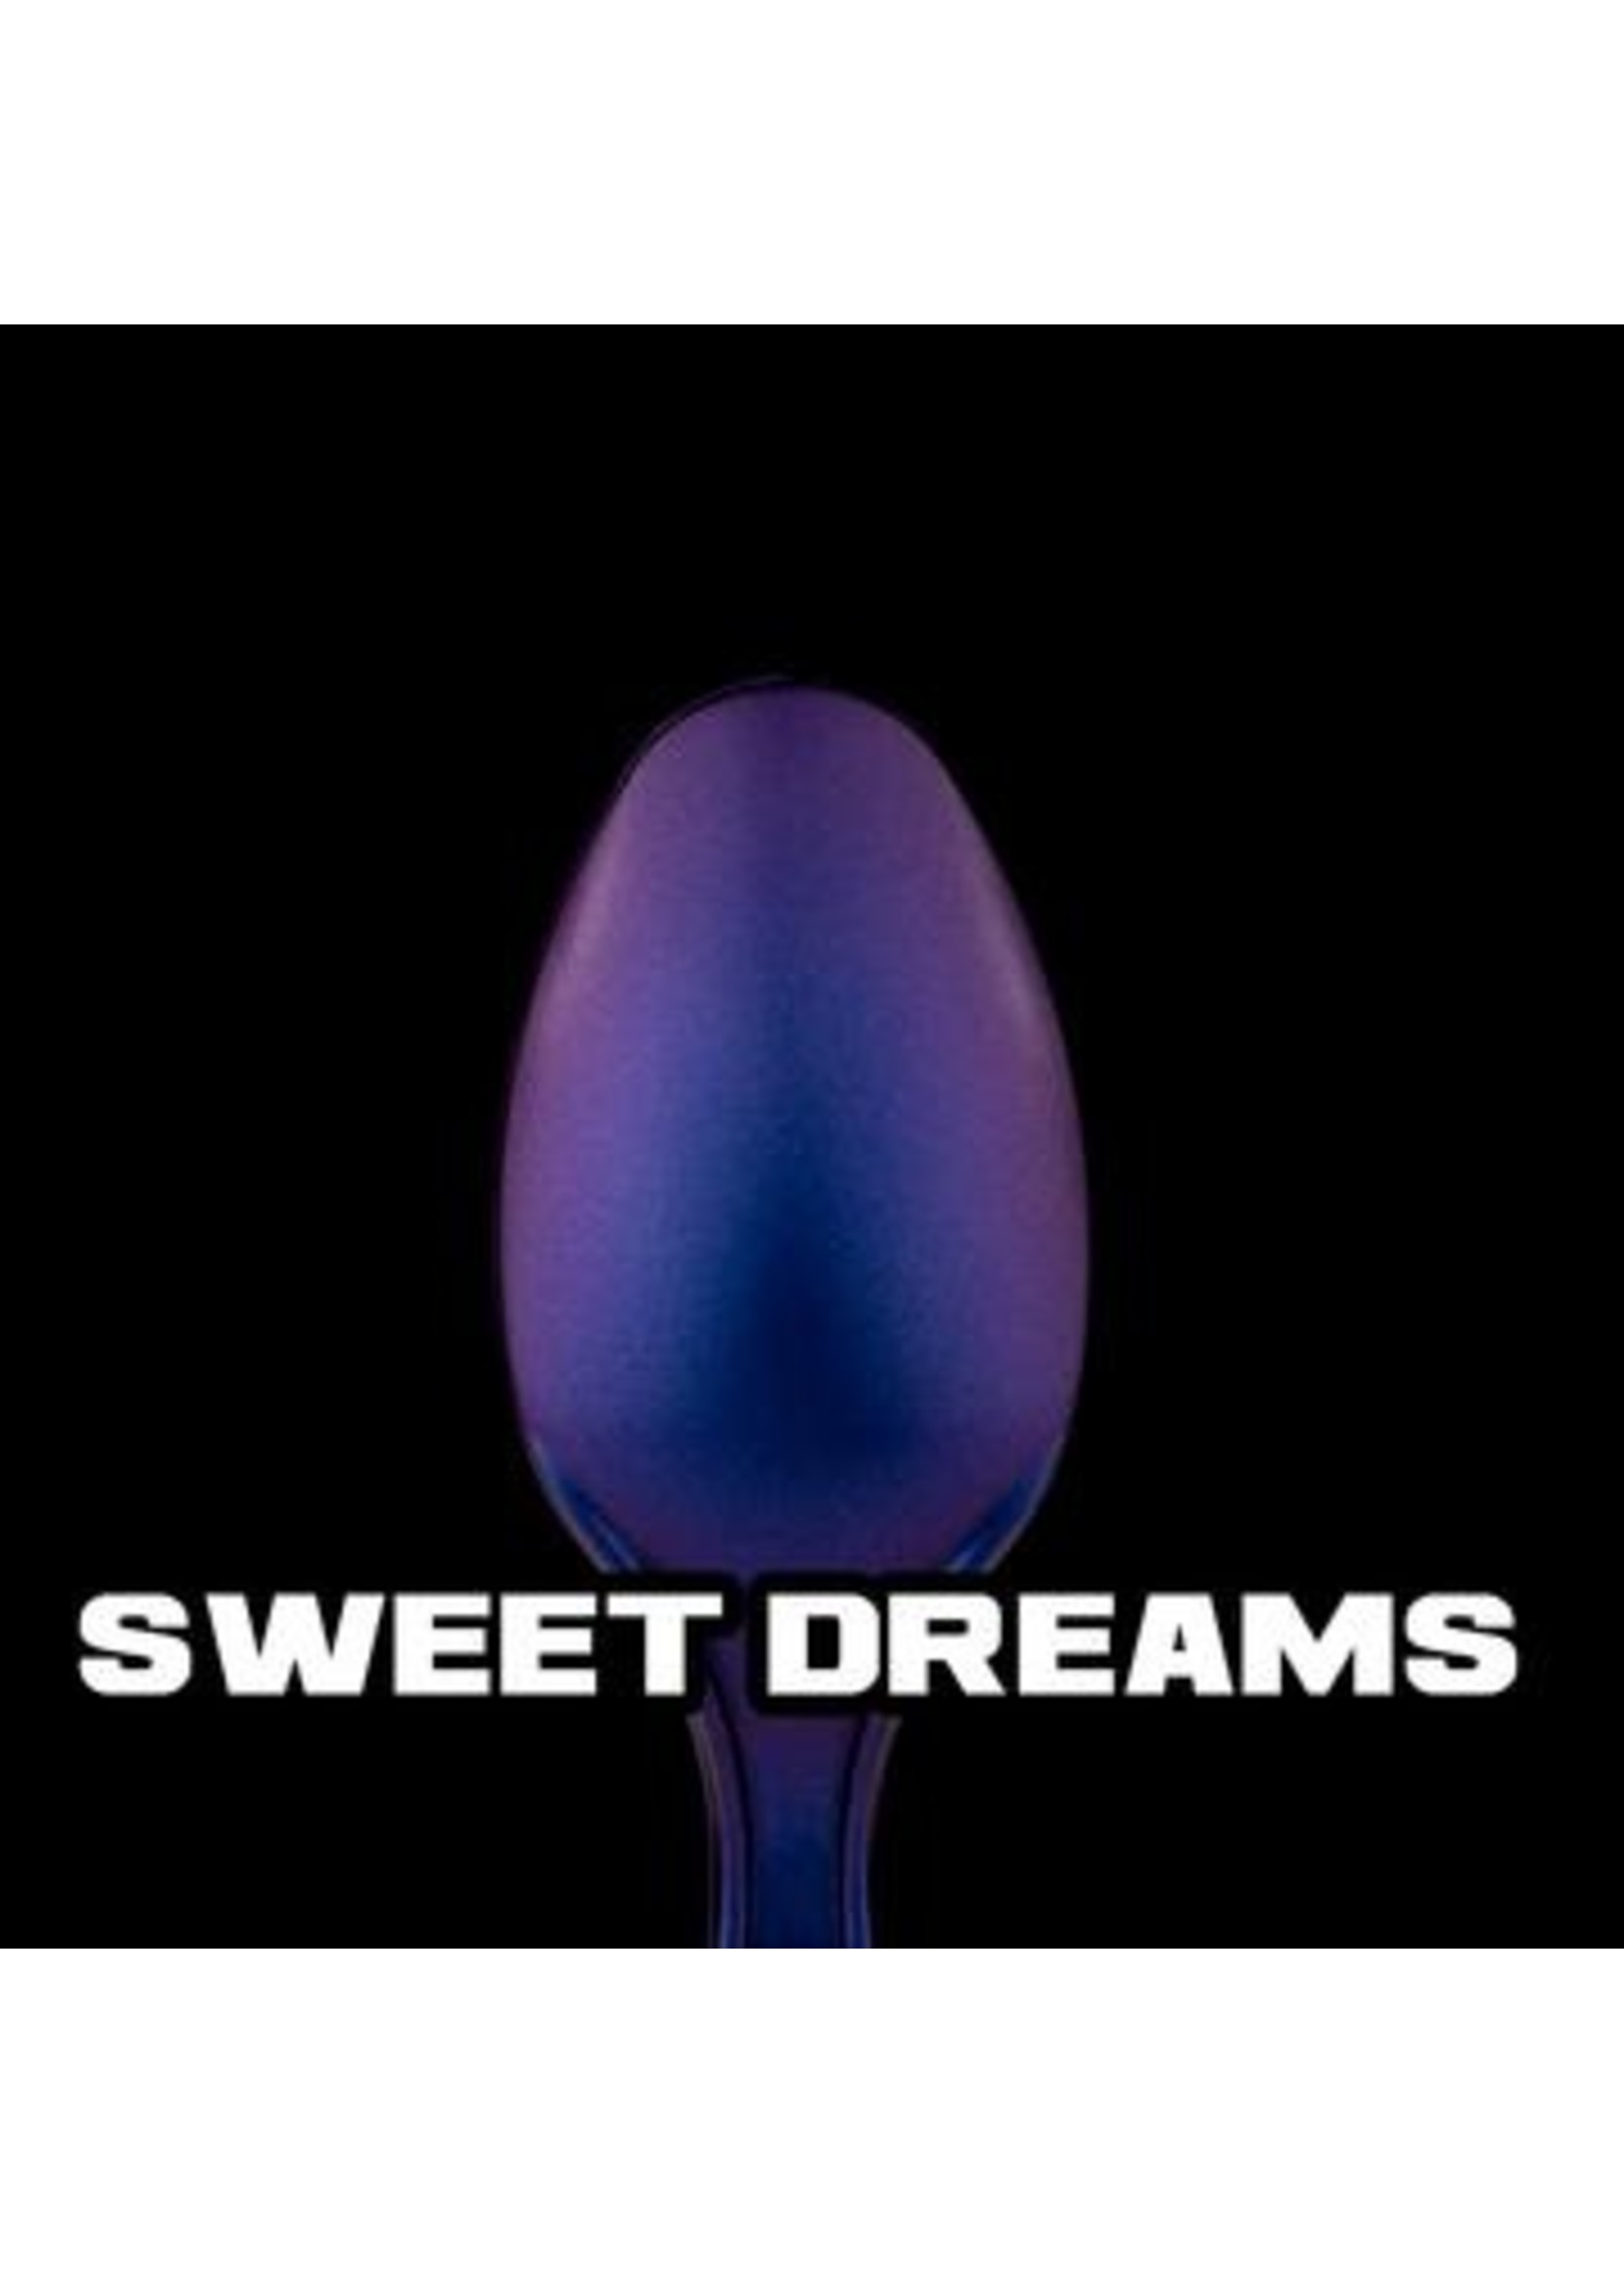 Turbo Dork Sweet Dreams Turboshift Acrylic Paint - 20ml Bottle (XXX)